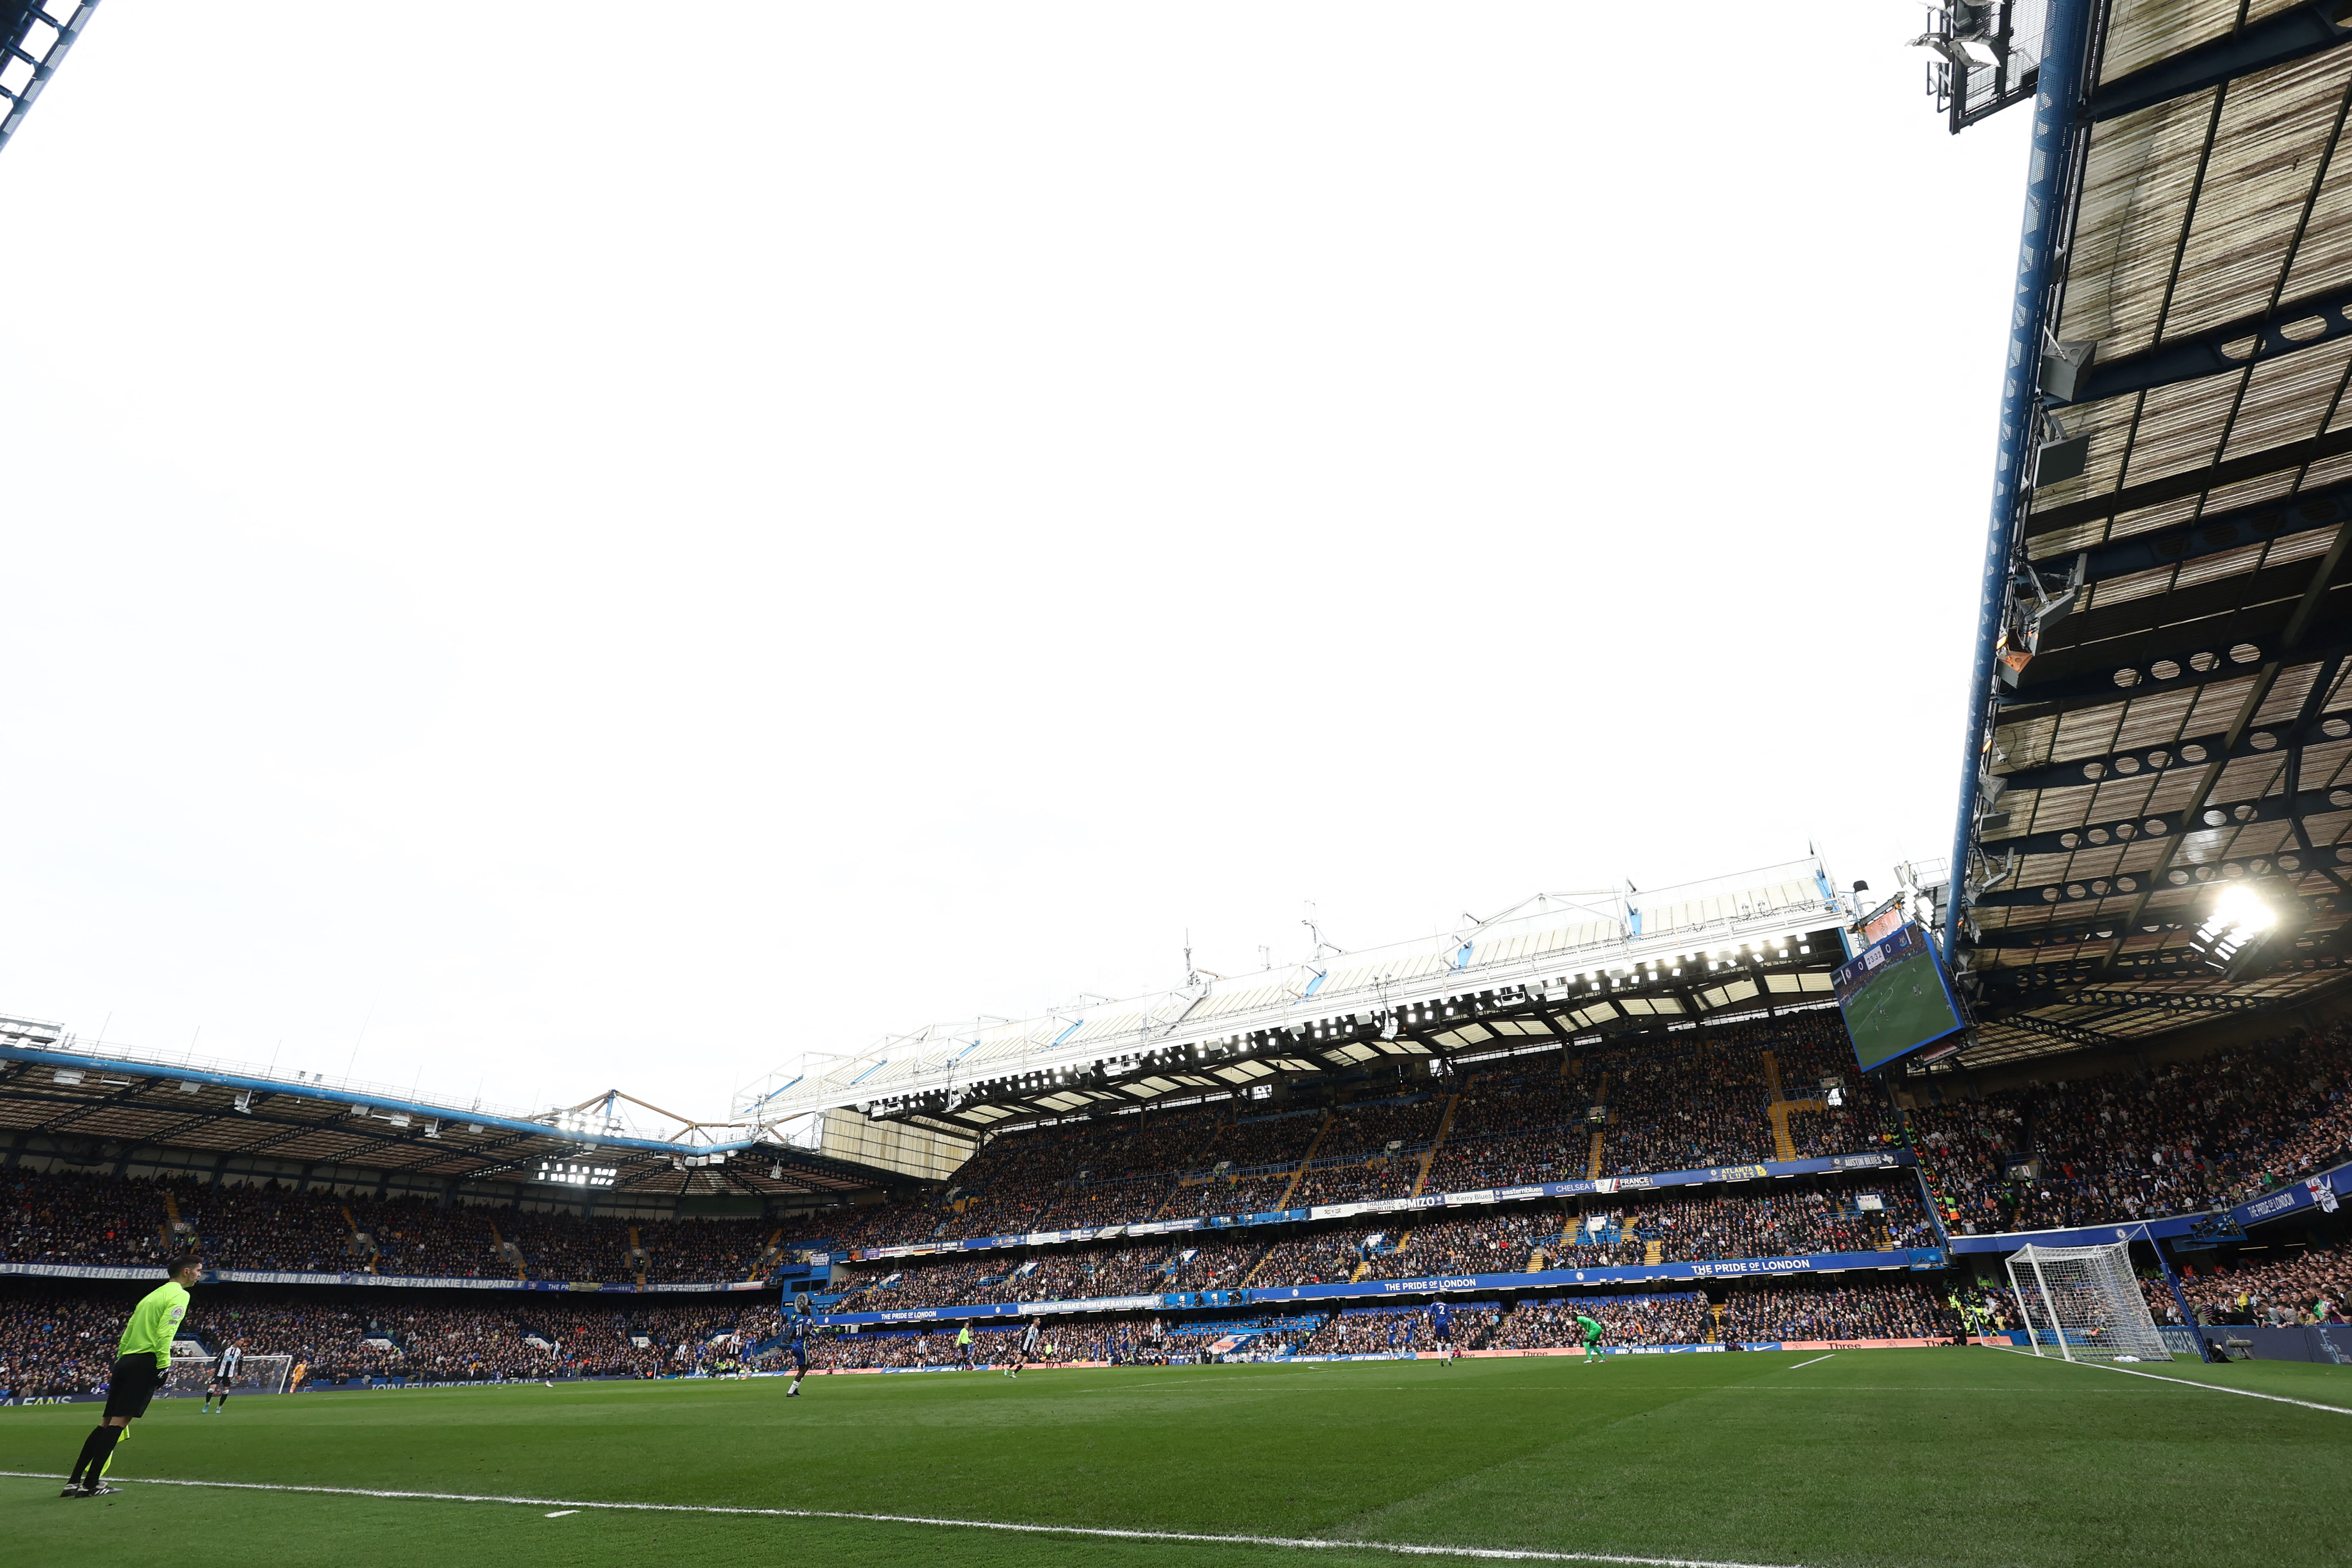 Postcard from Stamford Bridge, Chelsea Stadium (Reuters)